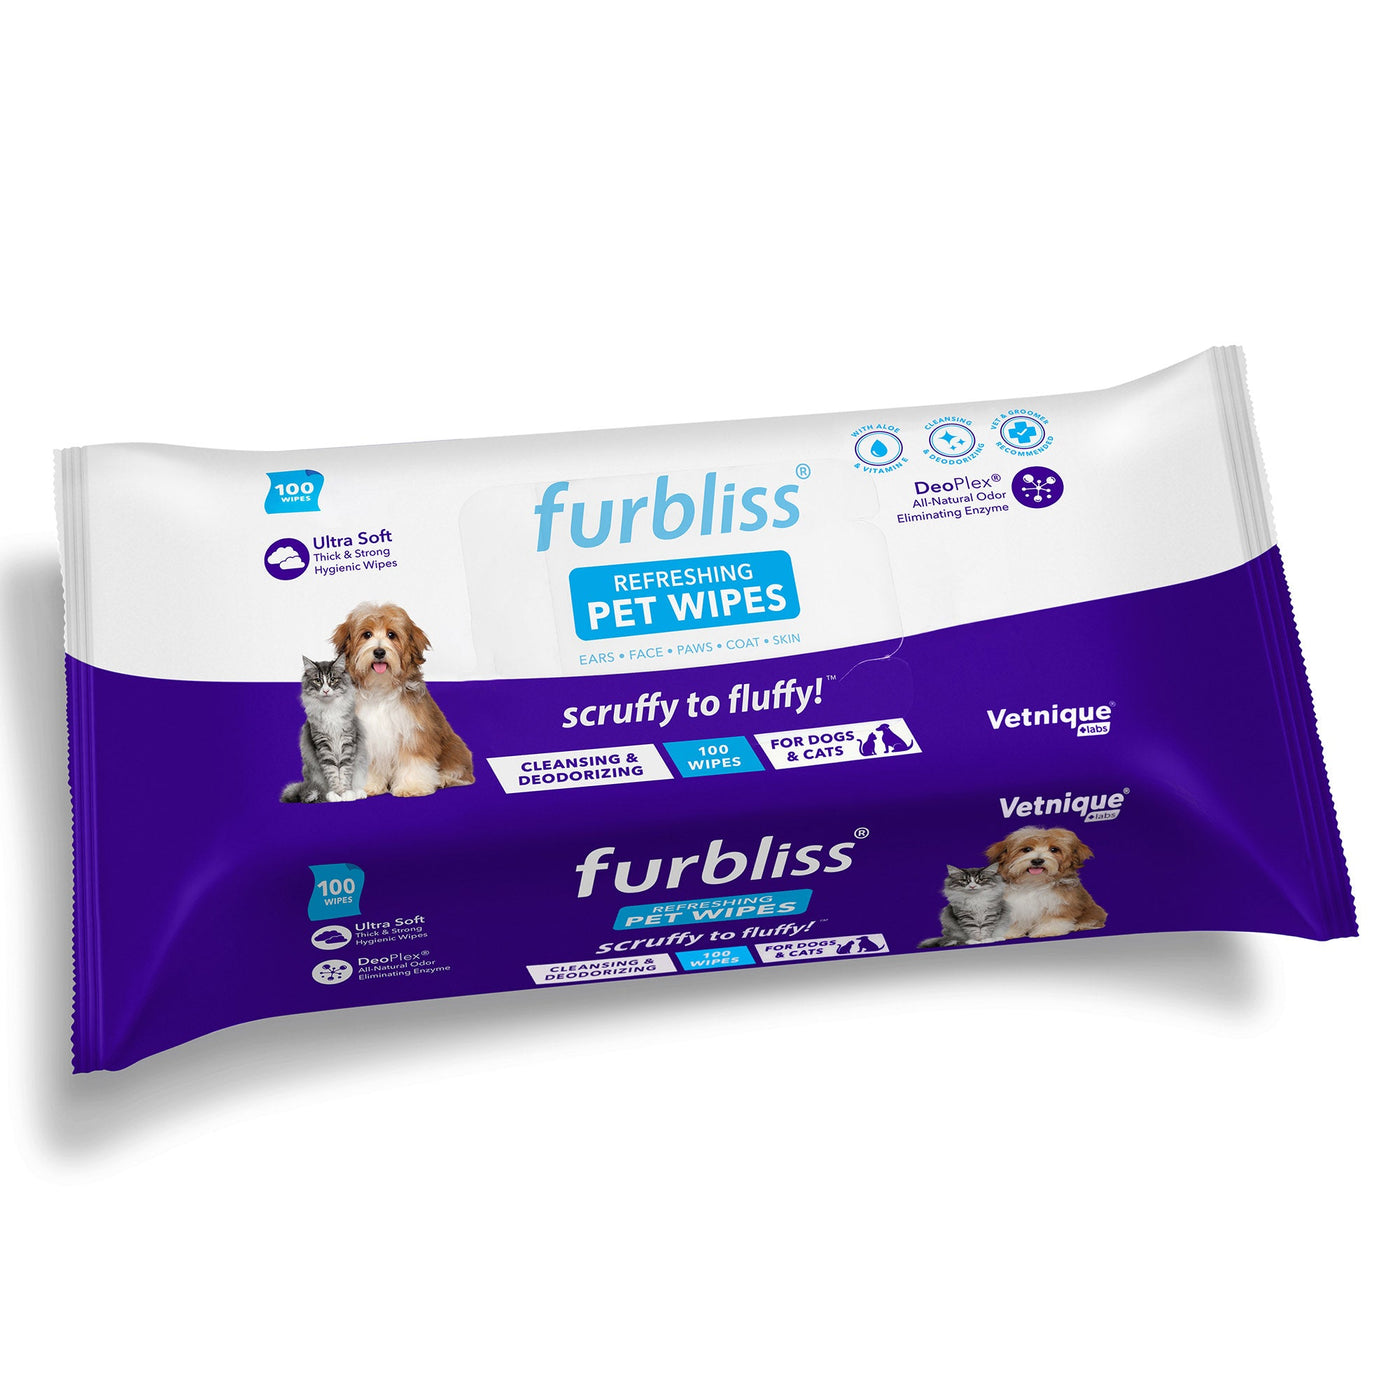 Furbliss Refreshing Pet Wipes